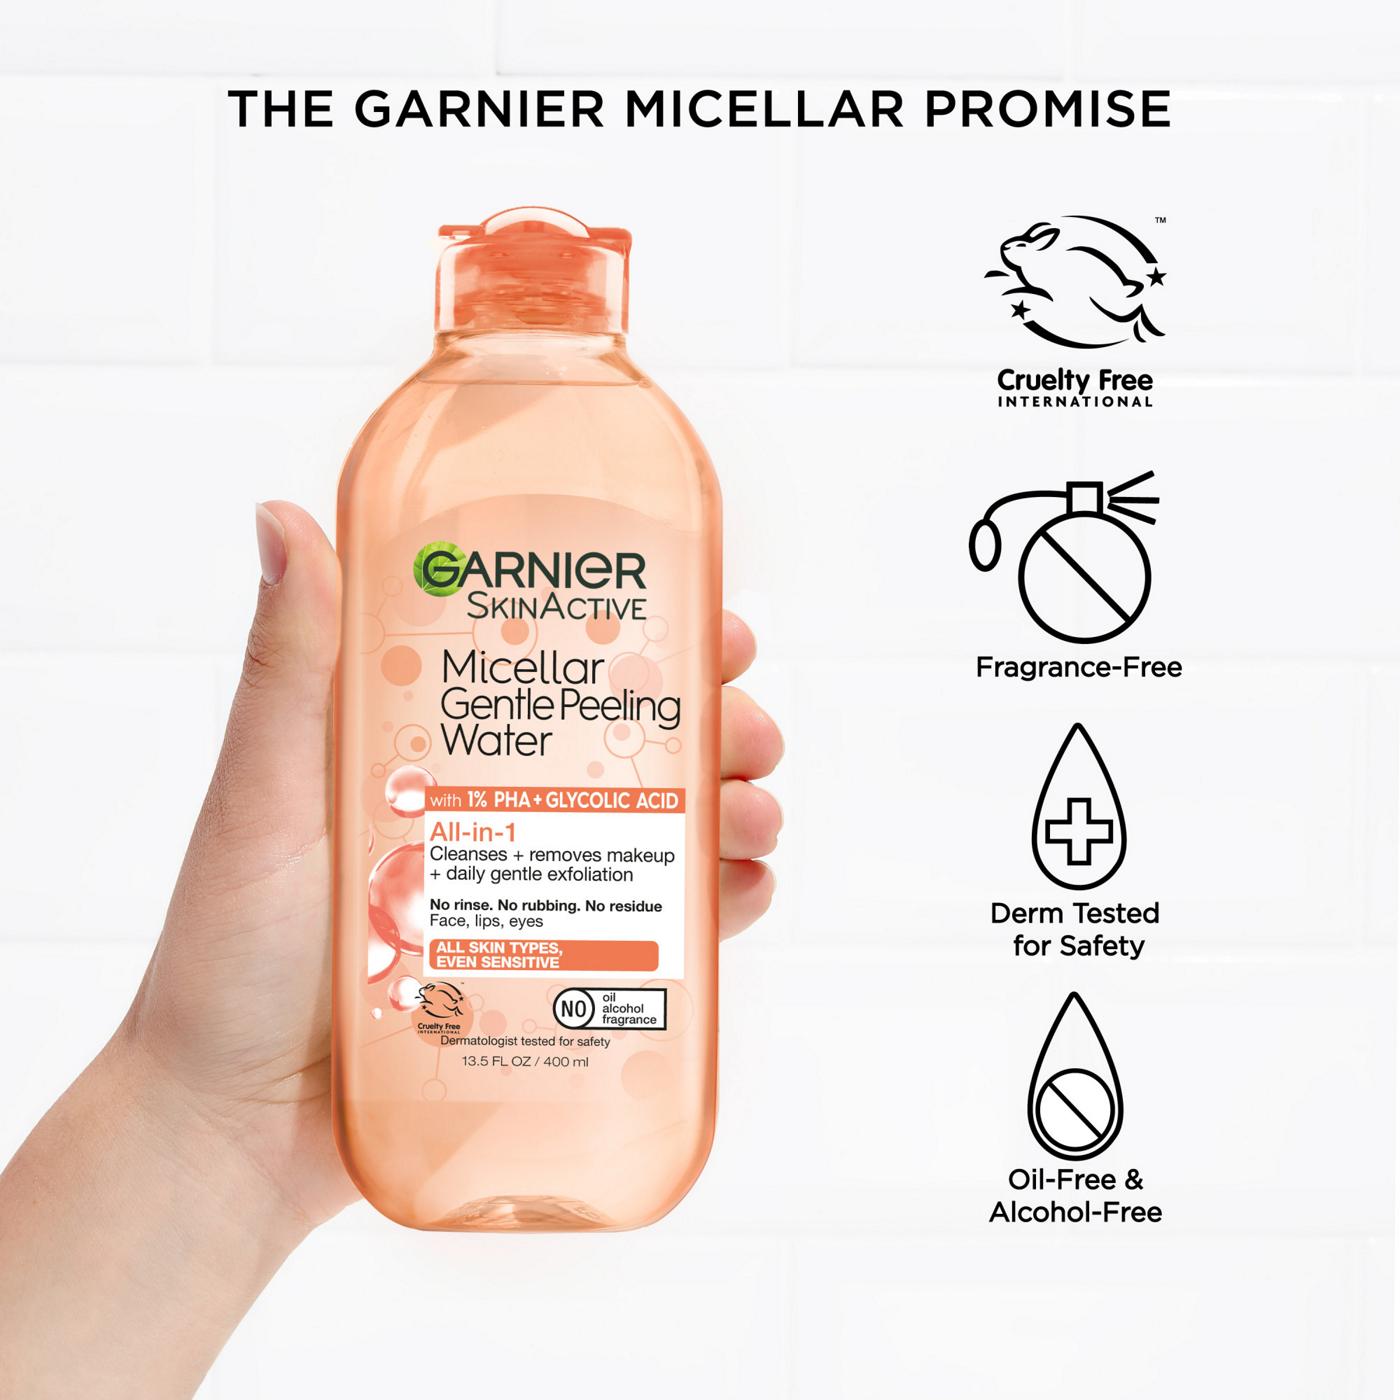 Garnier SkinActive Micellar Gentle Peeling Water; image 7 of 8